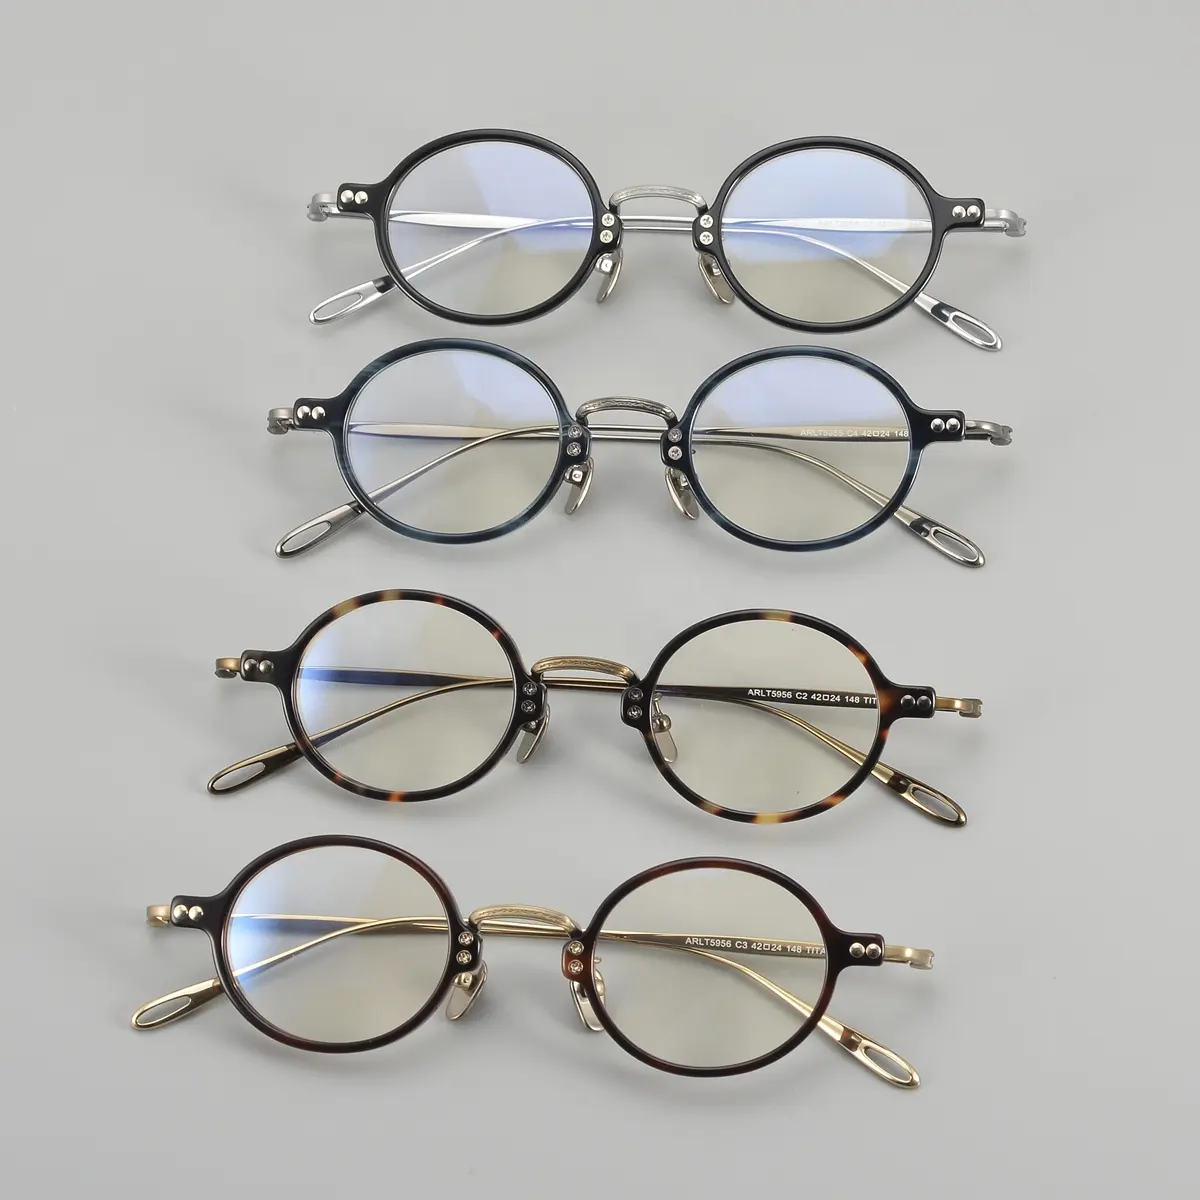 Bingkai kacamata retro titanium murni kualitas tinggi pabrik Jepang bingkai bulat logo kustom untuk pria dan wanita 5659